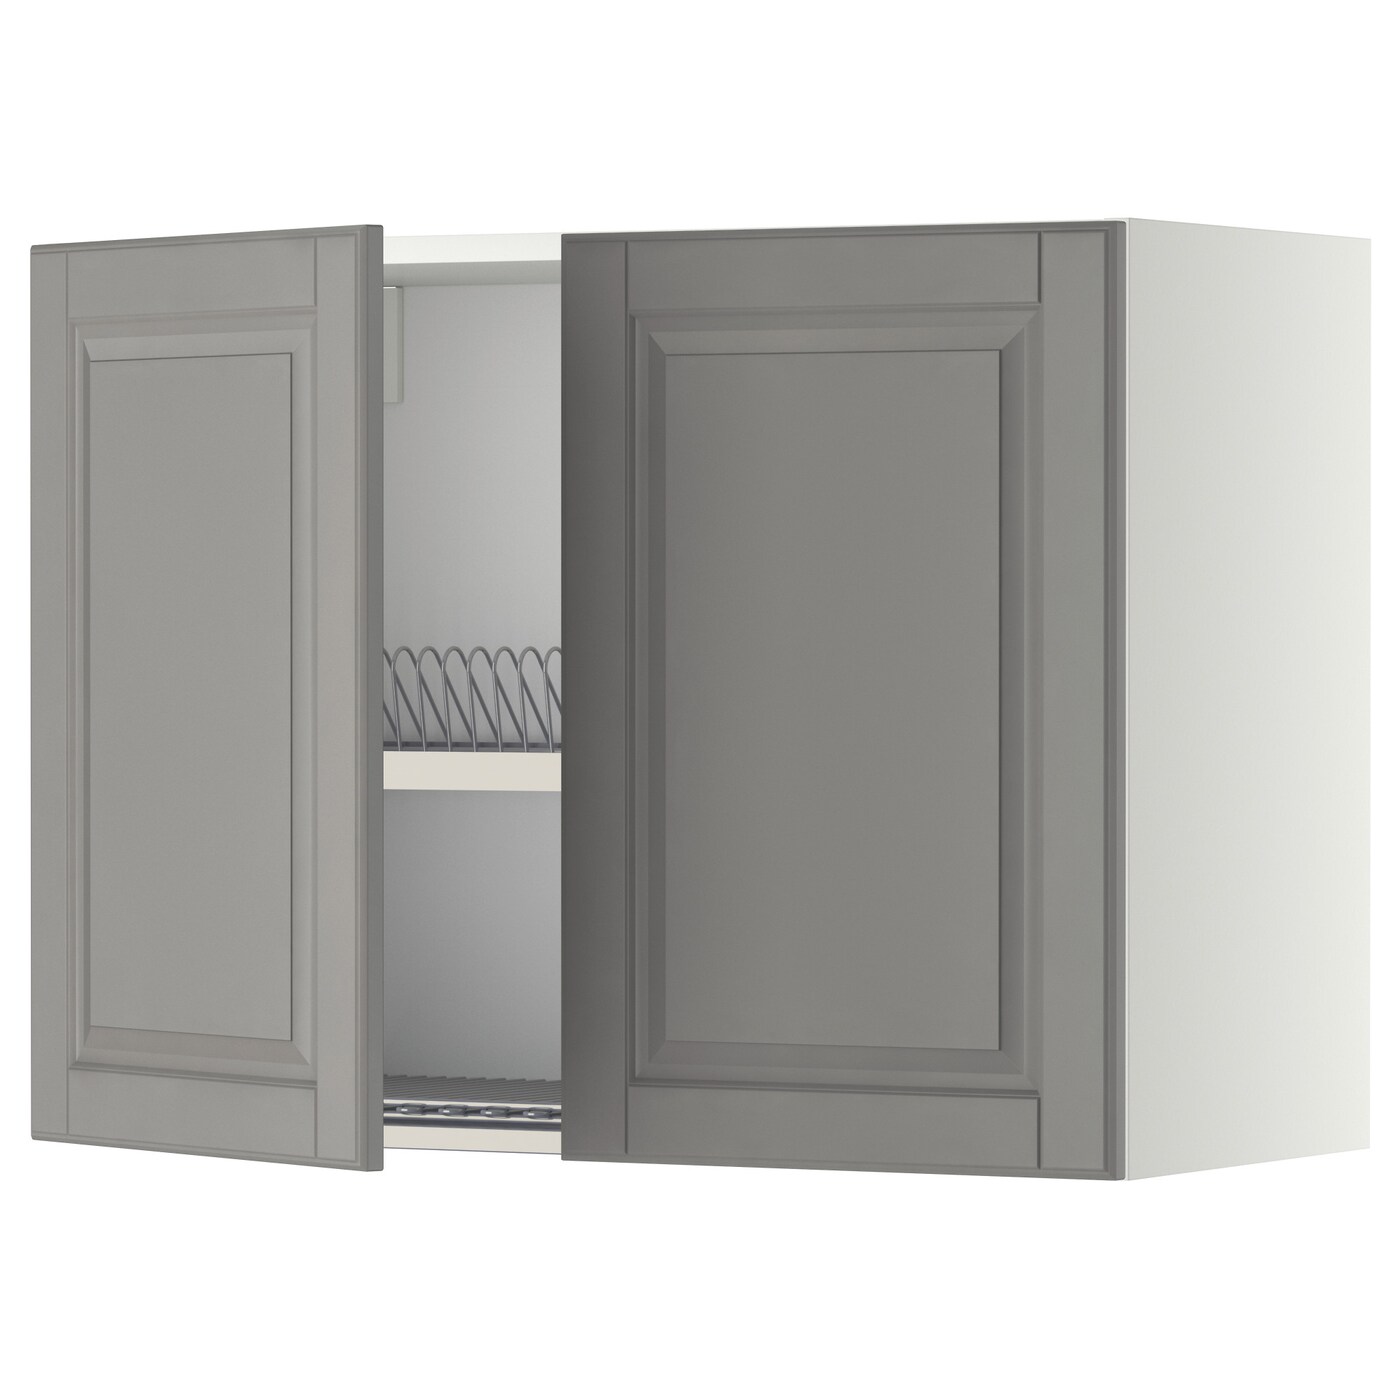 Навесной шкаф с сушилкой - METOD IKEA/ МЕТОД ИКЕА, 60х80 см, белый/серый